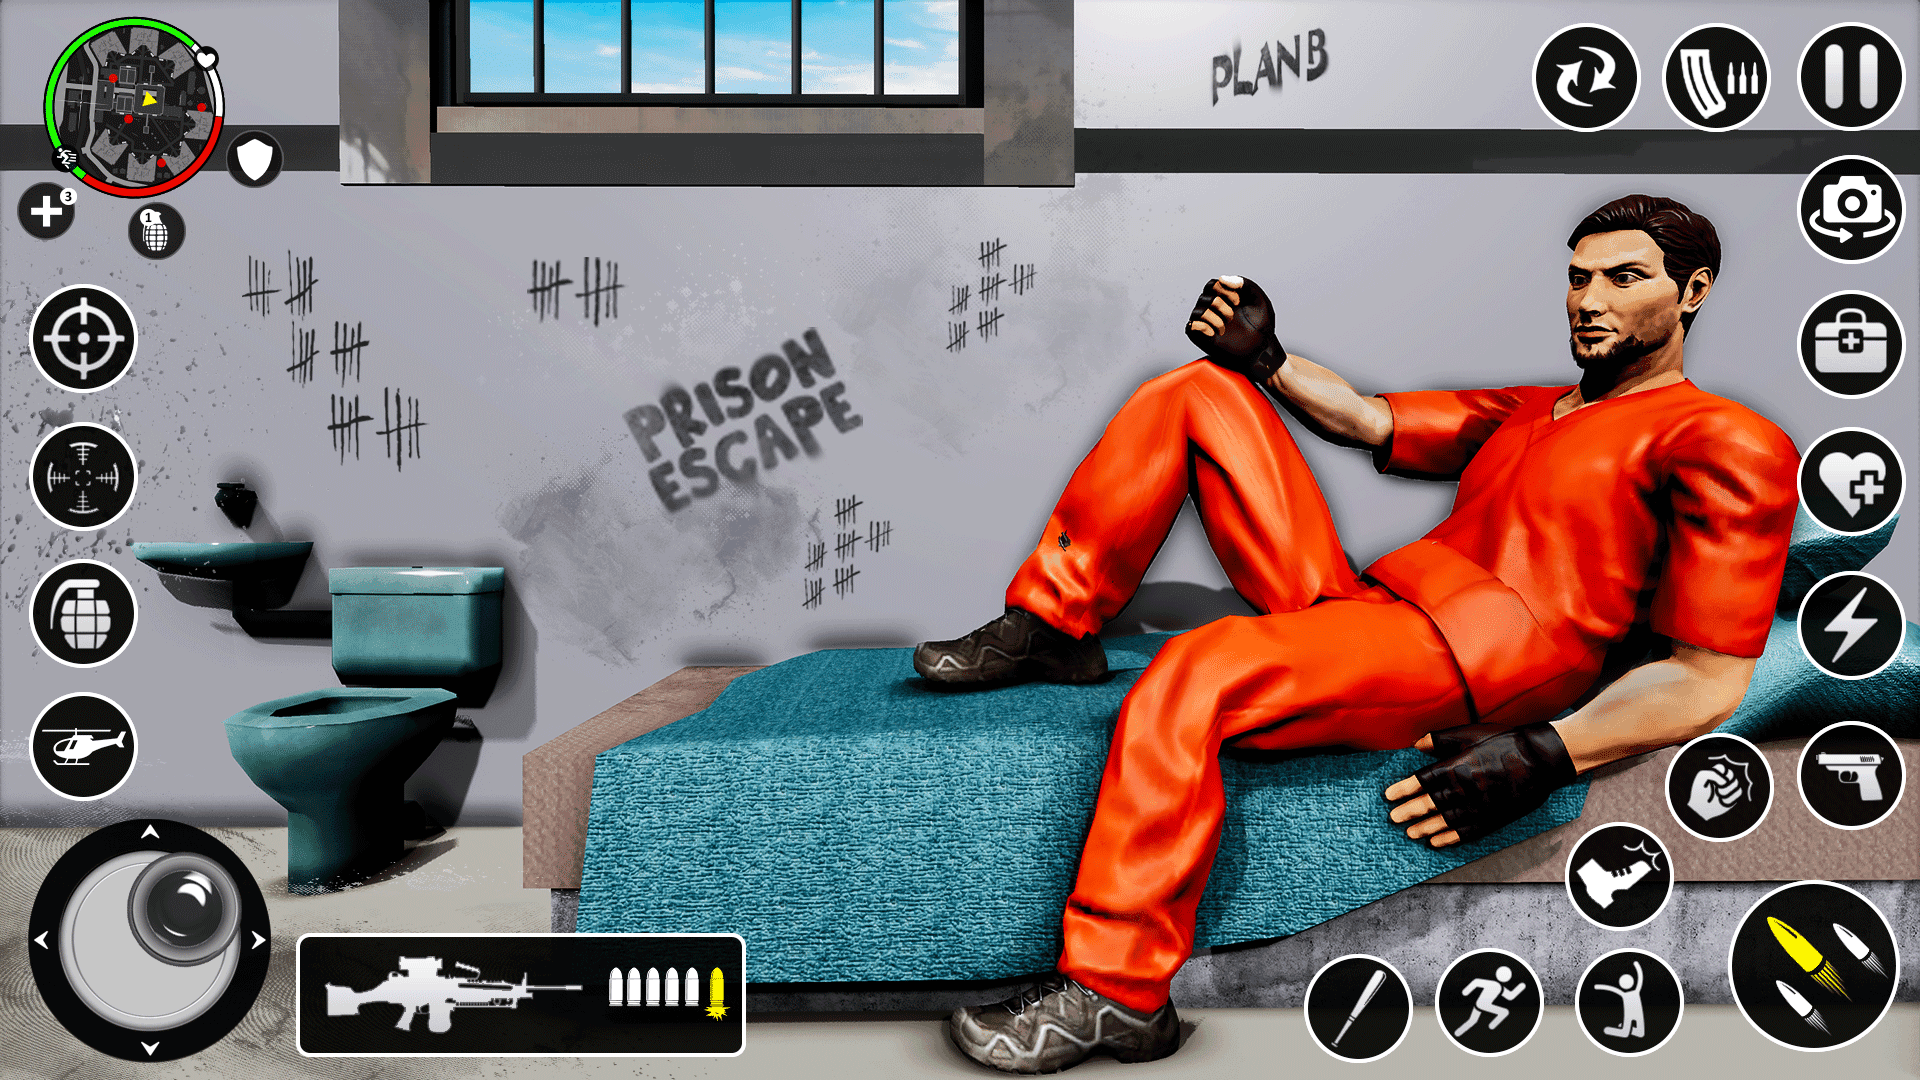 Grand Jailbreak Prison Escape APK for Android Download